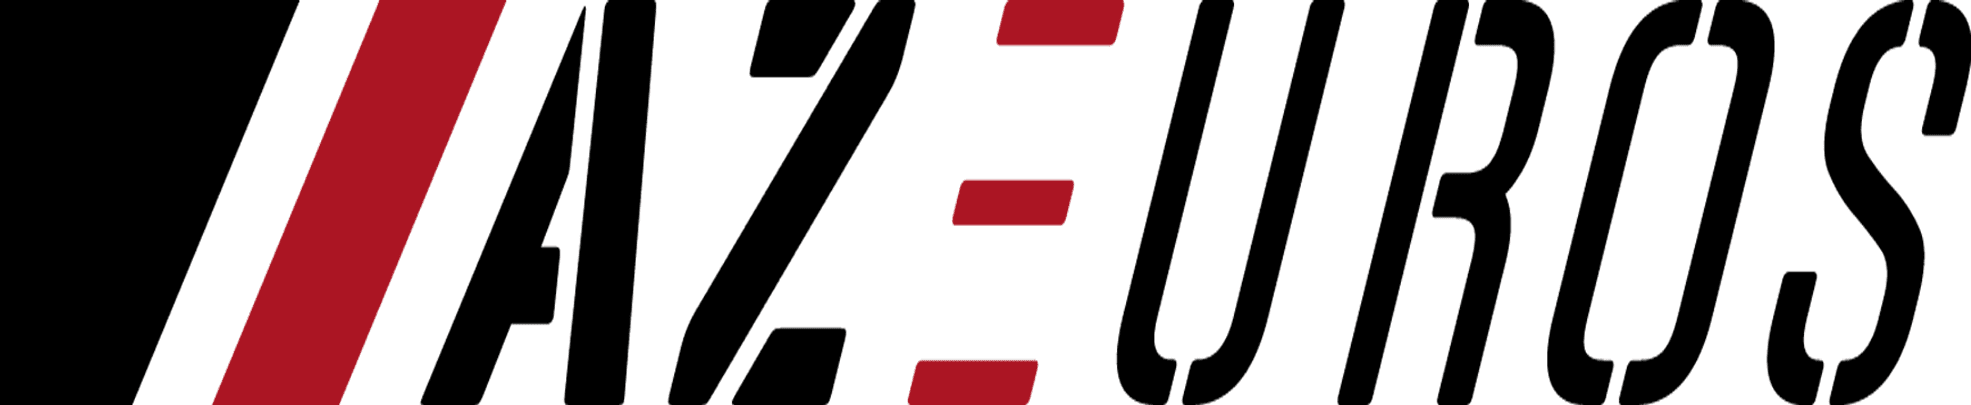 AZ Euros logo